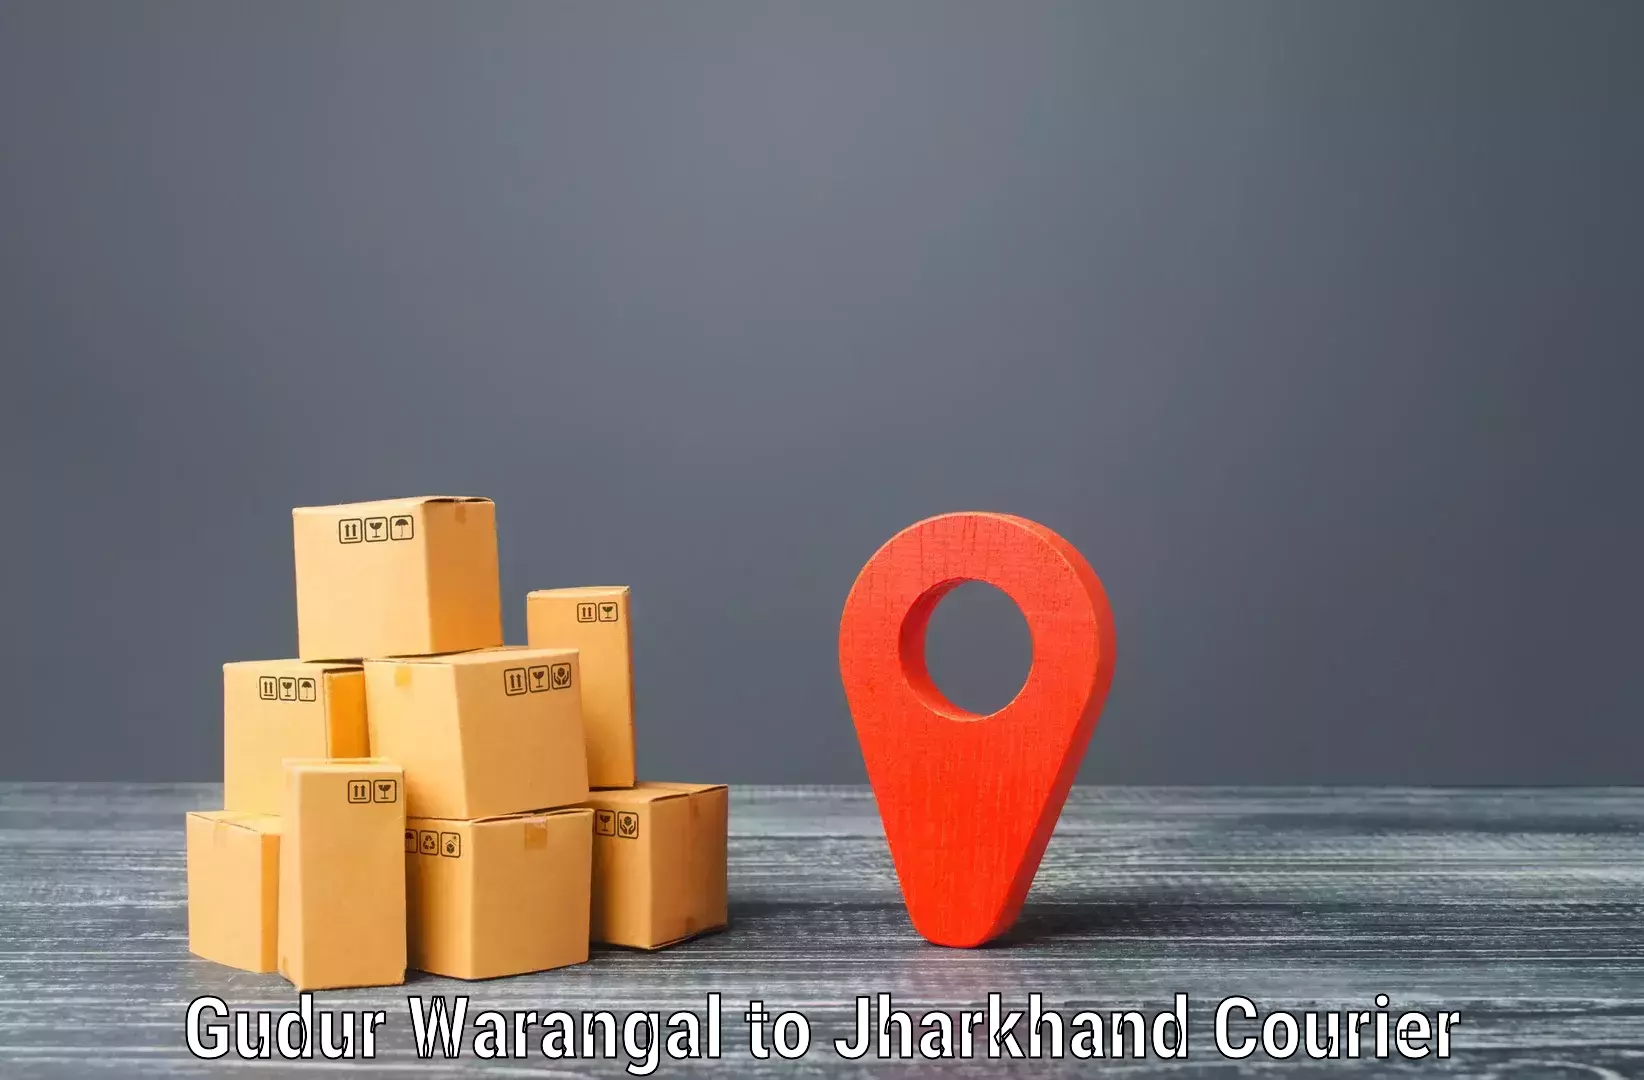 Courier service innovation Gudur Warangal to Hariharganj